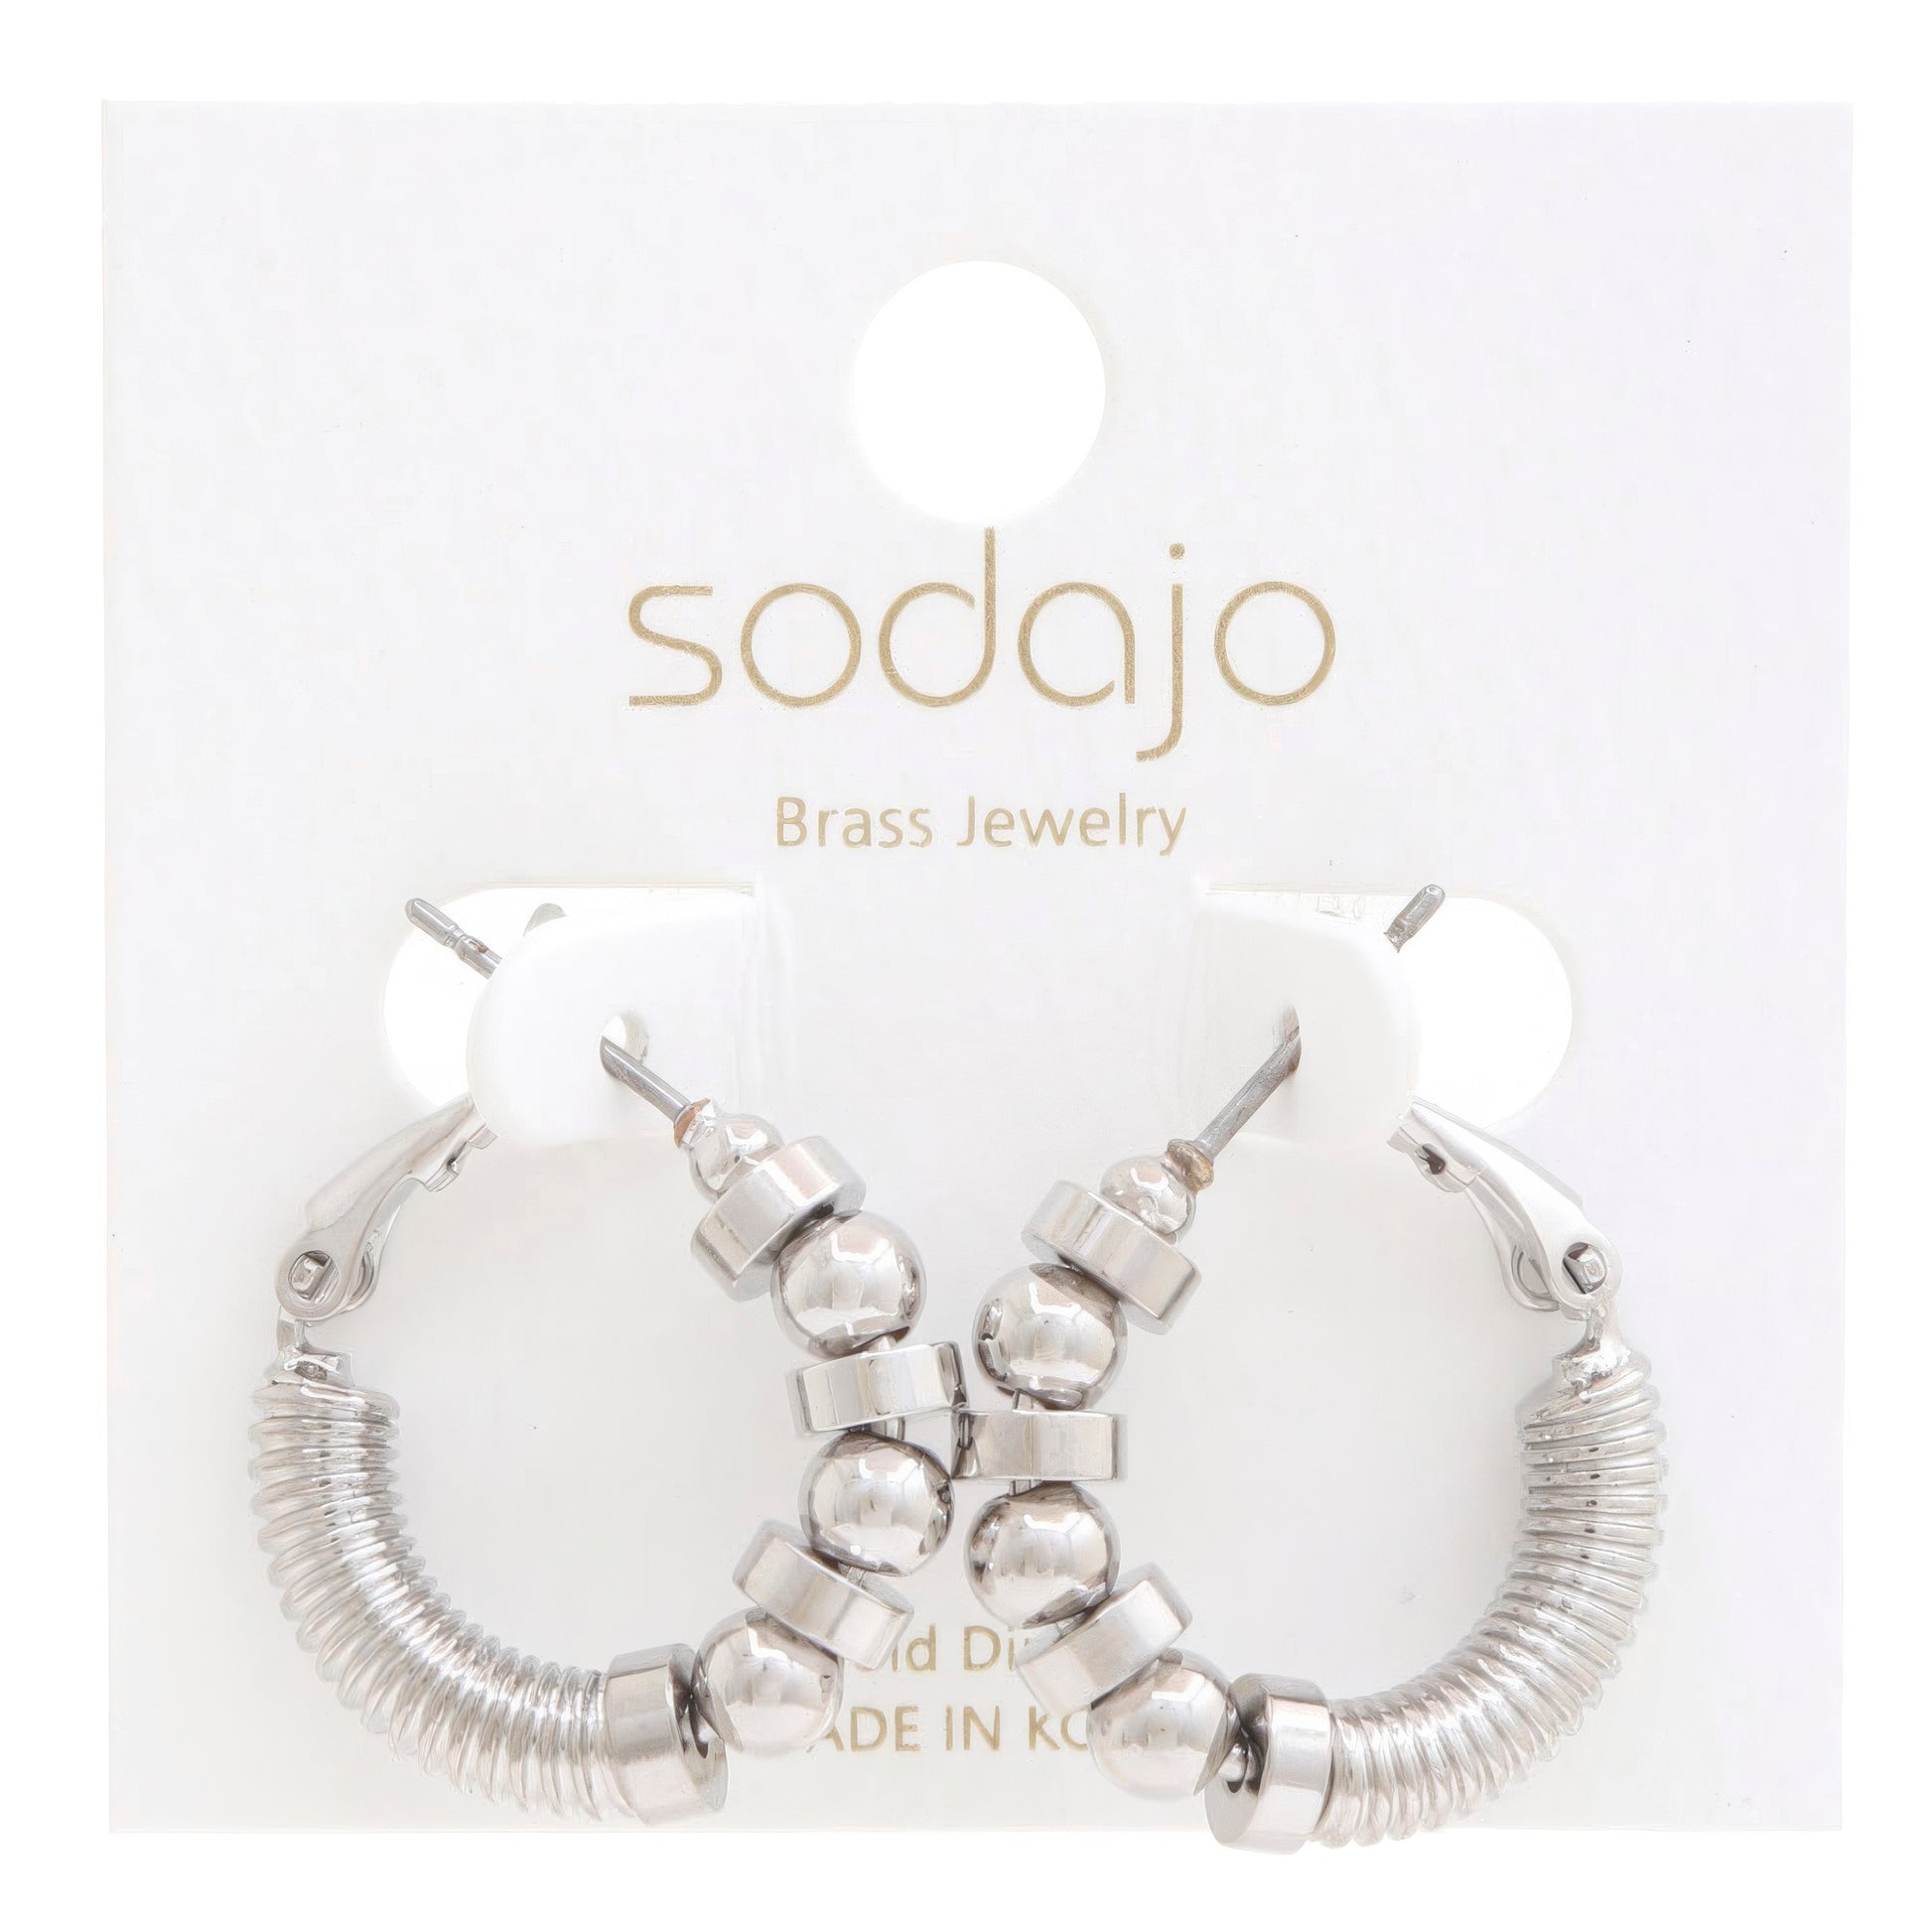 Sodajo Ball Bead Link Gold Dipped Hoop Earring - Tigbuls Variety Fashion